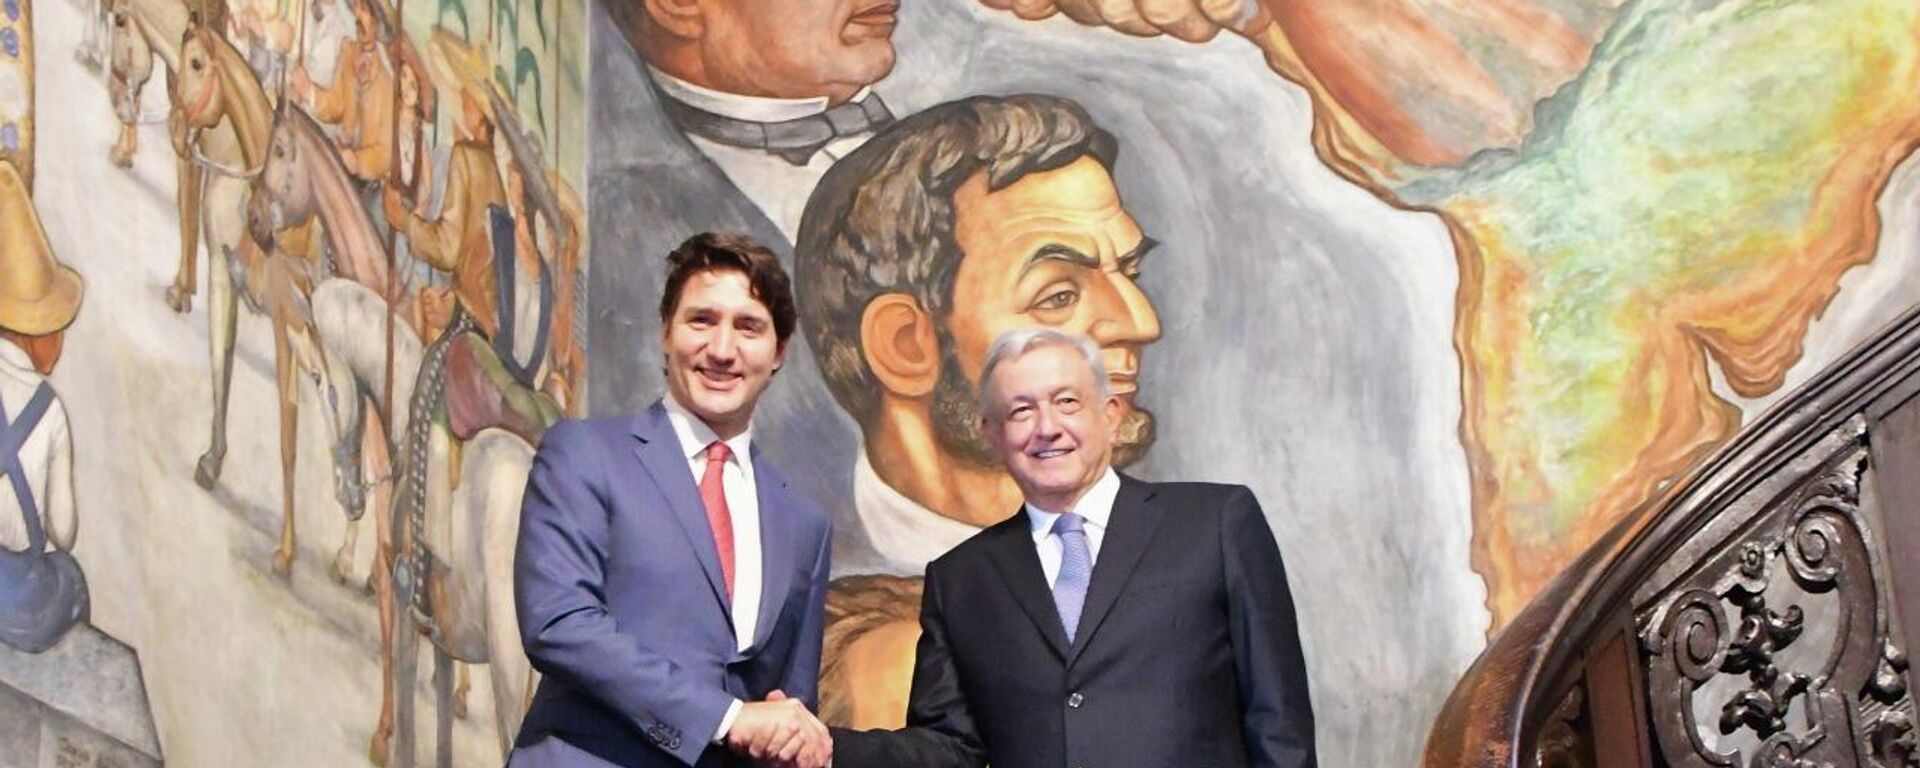 Justin Trudeau, primer ministro de Canadá, y Andrés Manuel López Obrador, presidente de México - Sputnik Mundo, 1920, 22.11.2021